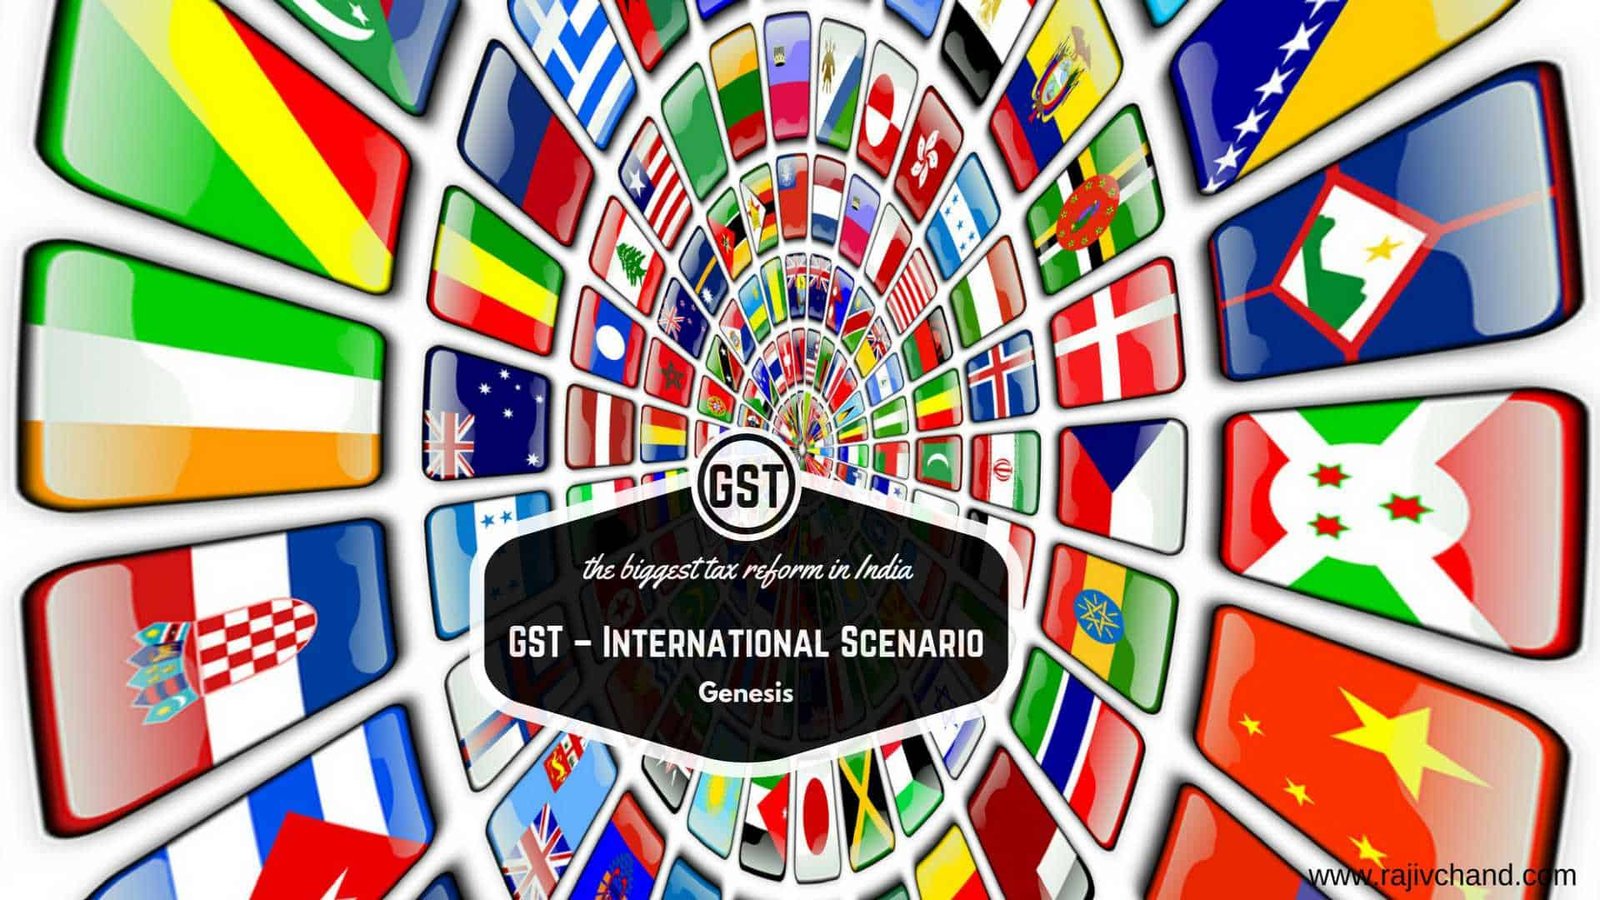 GST – International Scenario